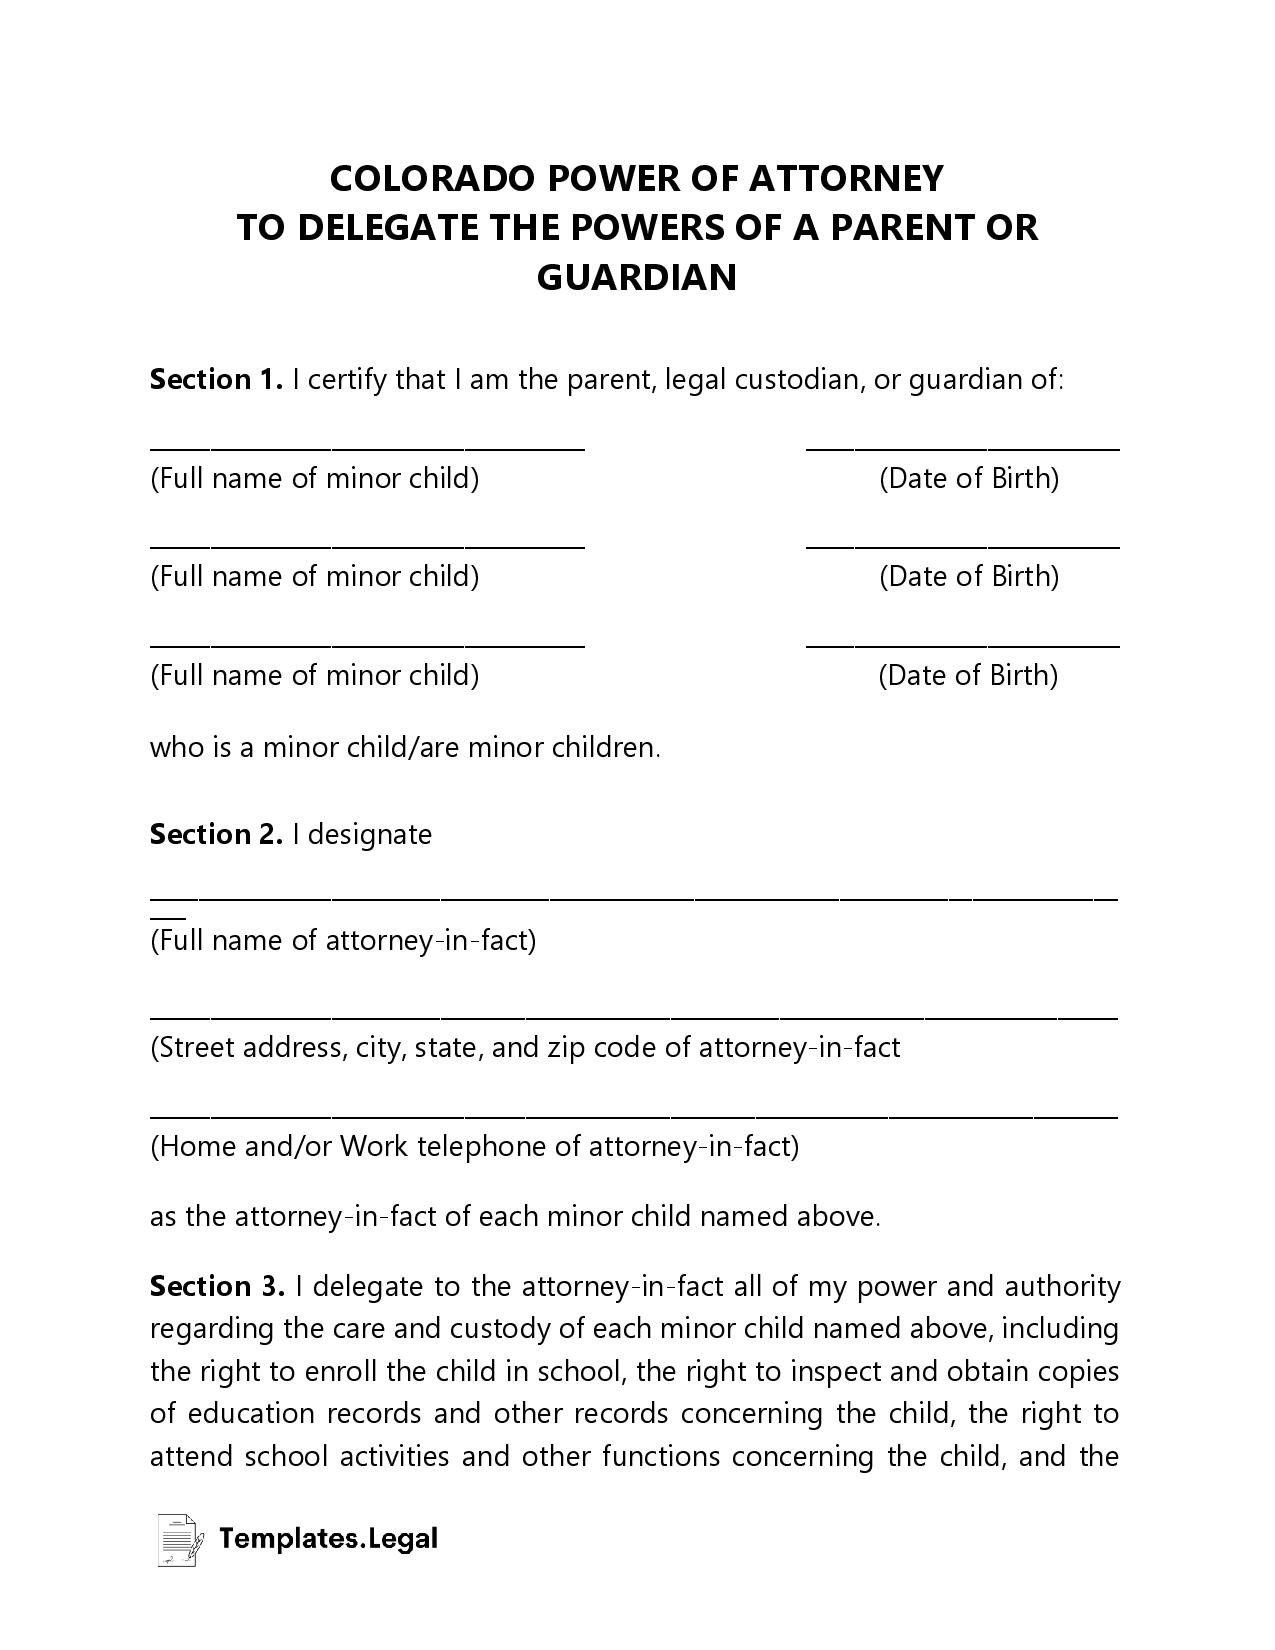 Colorado Minor (Child) Power of Attorney - Templates.Legal